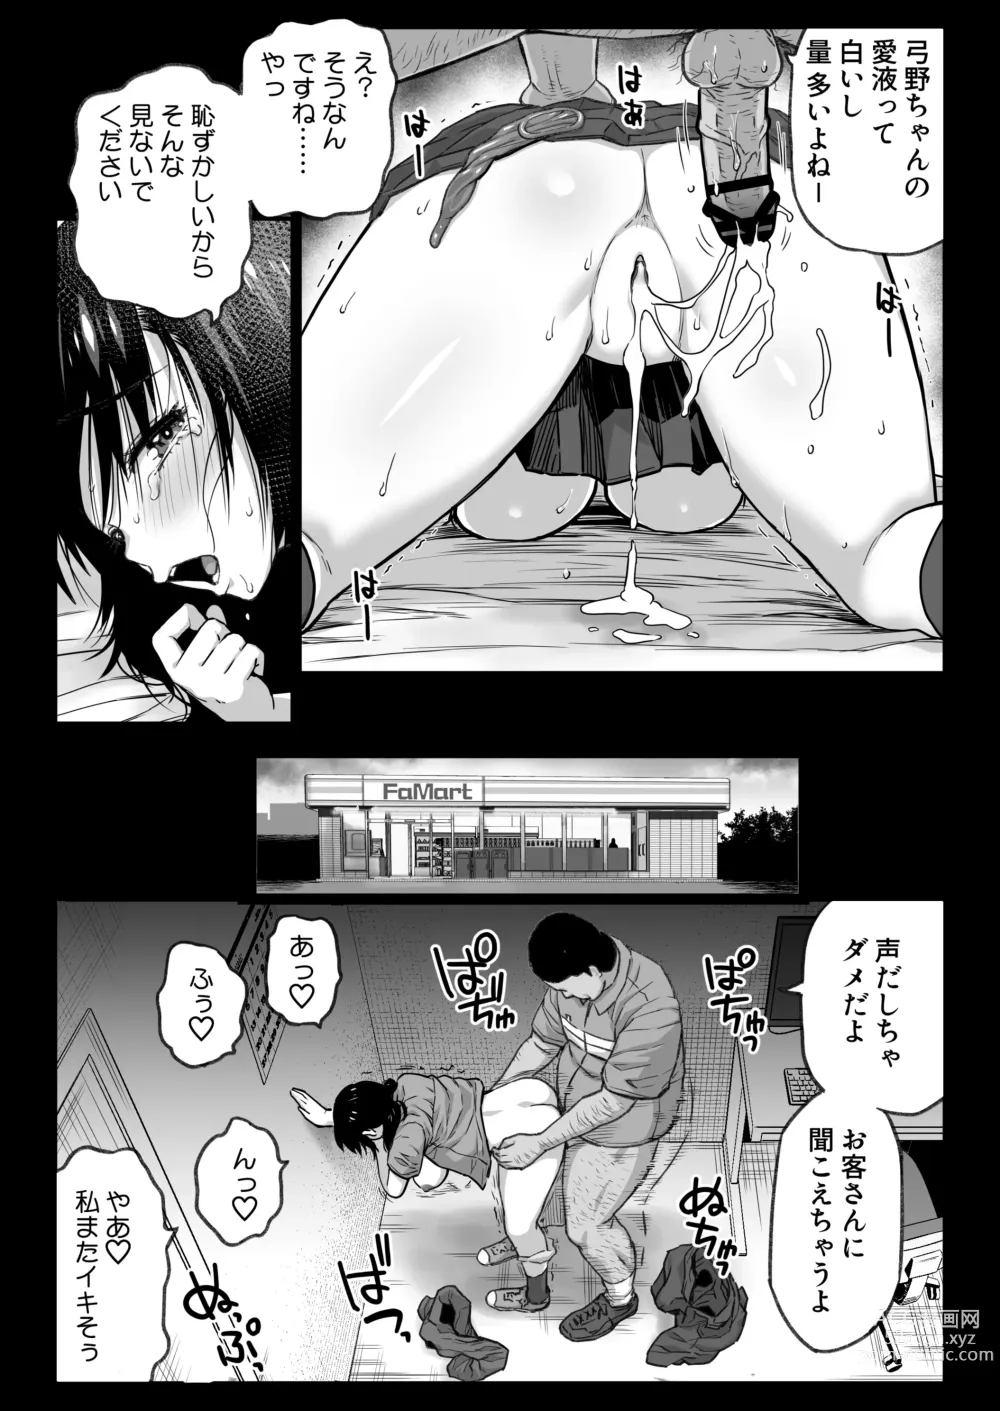 Page 165 of doujinshi Kareshi Mochi Gakusei Beit Yumino-chan wa Kyou mo Tenchou ni Nerawareru